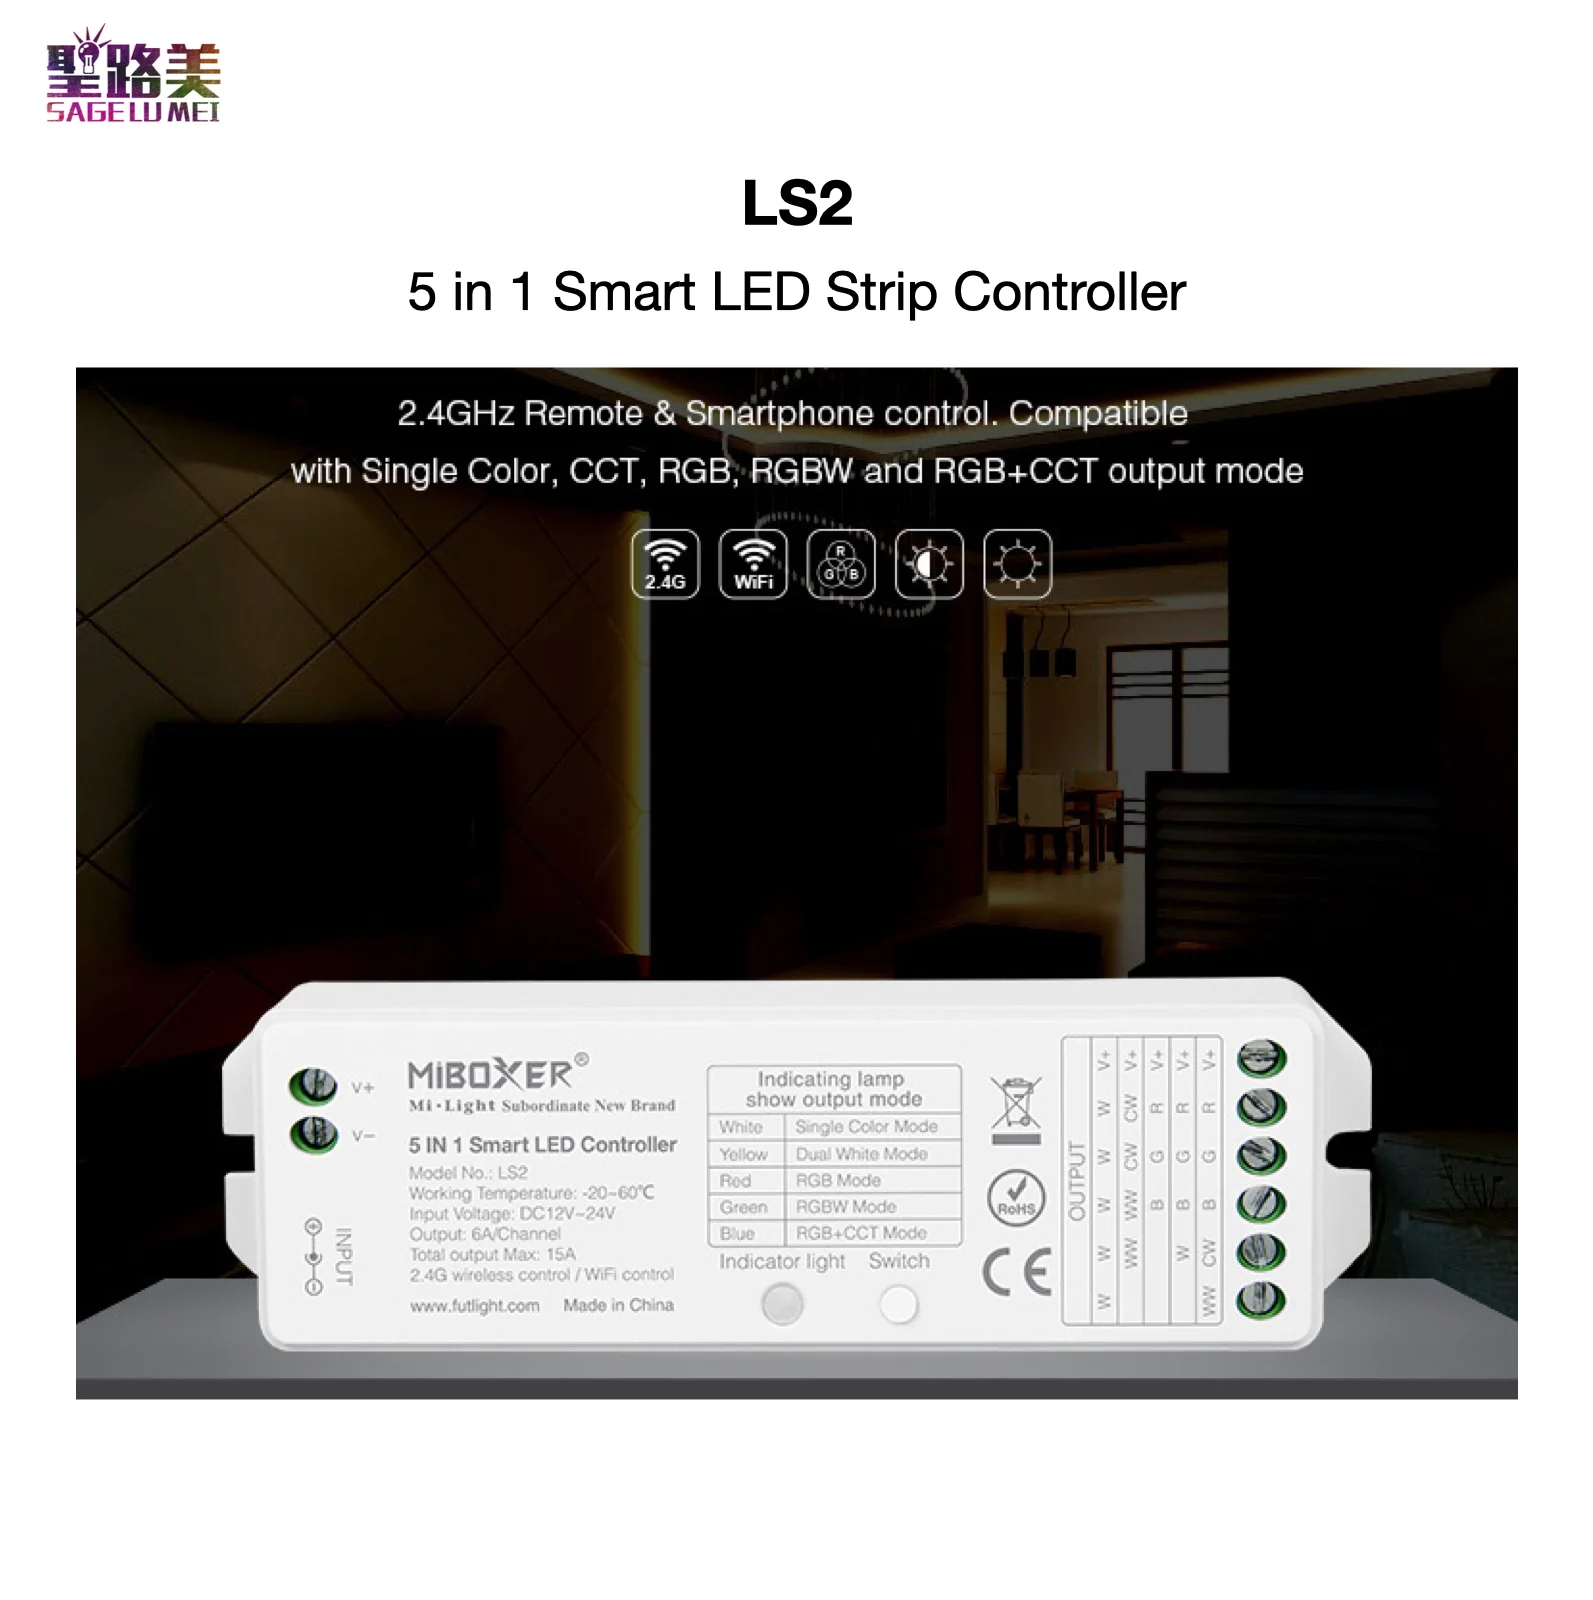 LS2 LIGHTEU® Ls2 Miboxer Milight Contrôleur de bande LED intelligent 5 en 1 